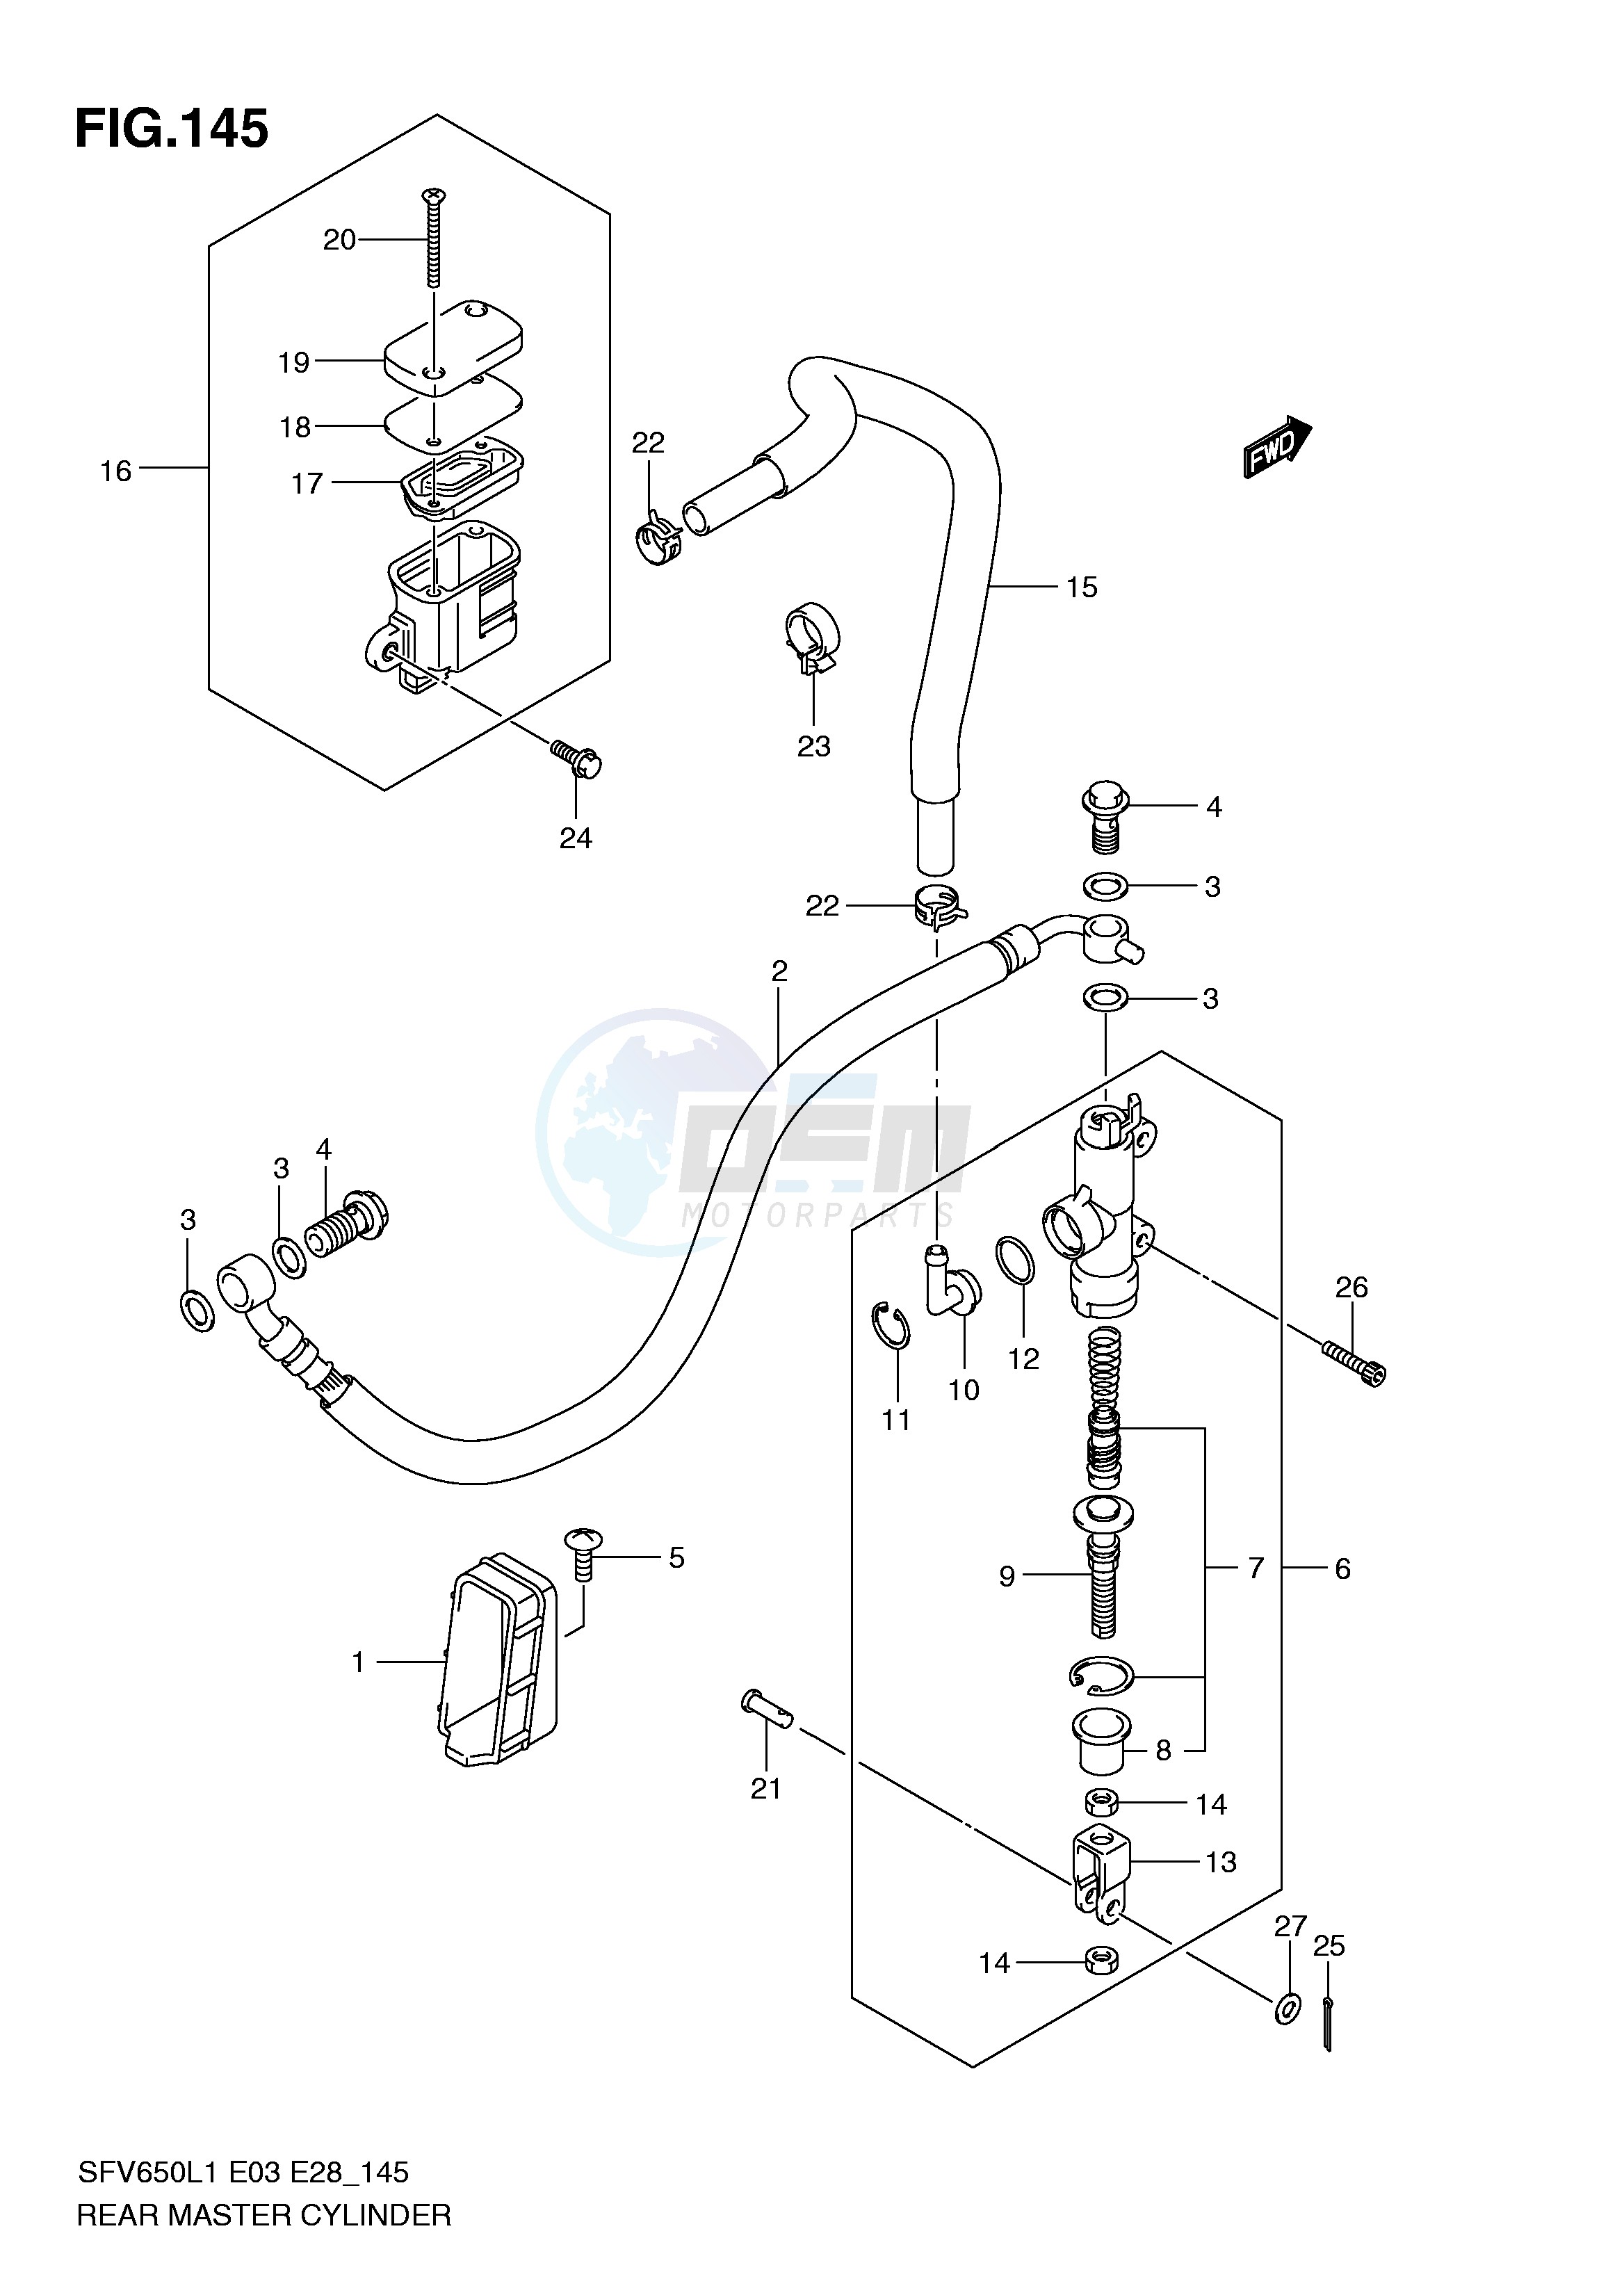 REAR MASTER CYLINDER (SFV650L1 E33) blueprint